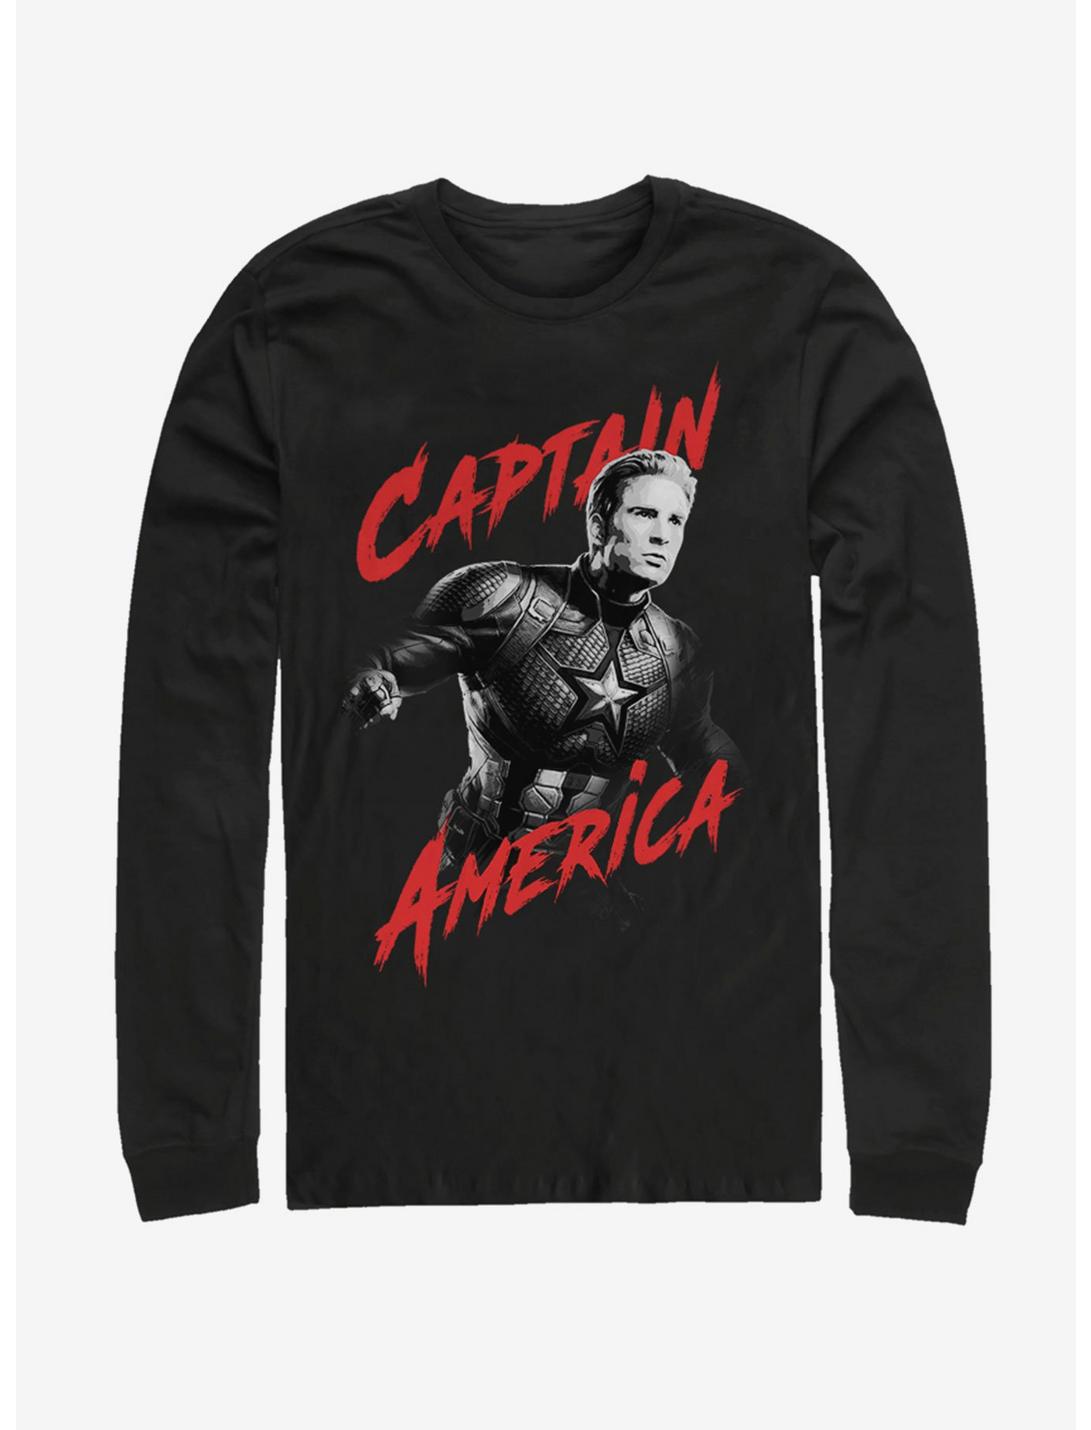 Marvel Avengers: Endgame High Contrast America Long Sleeve T-Shirt, BLACK, hi-res